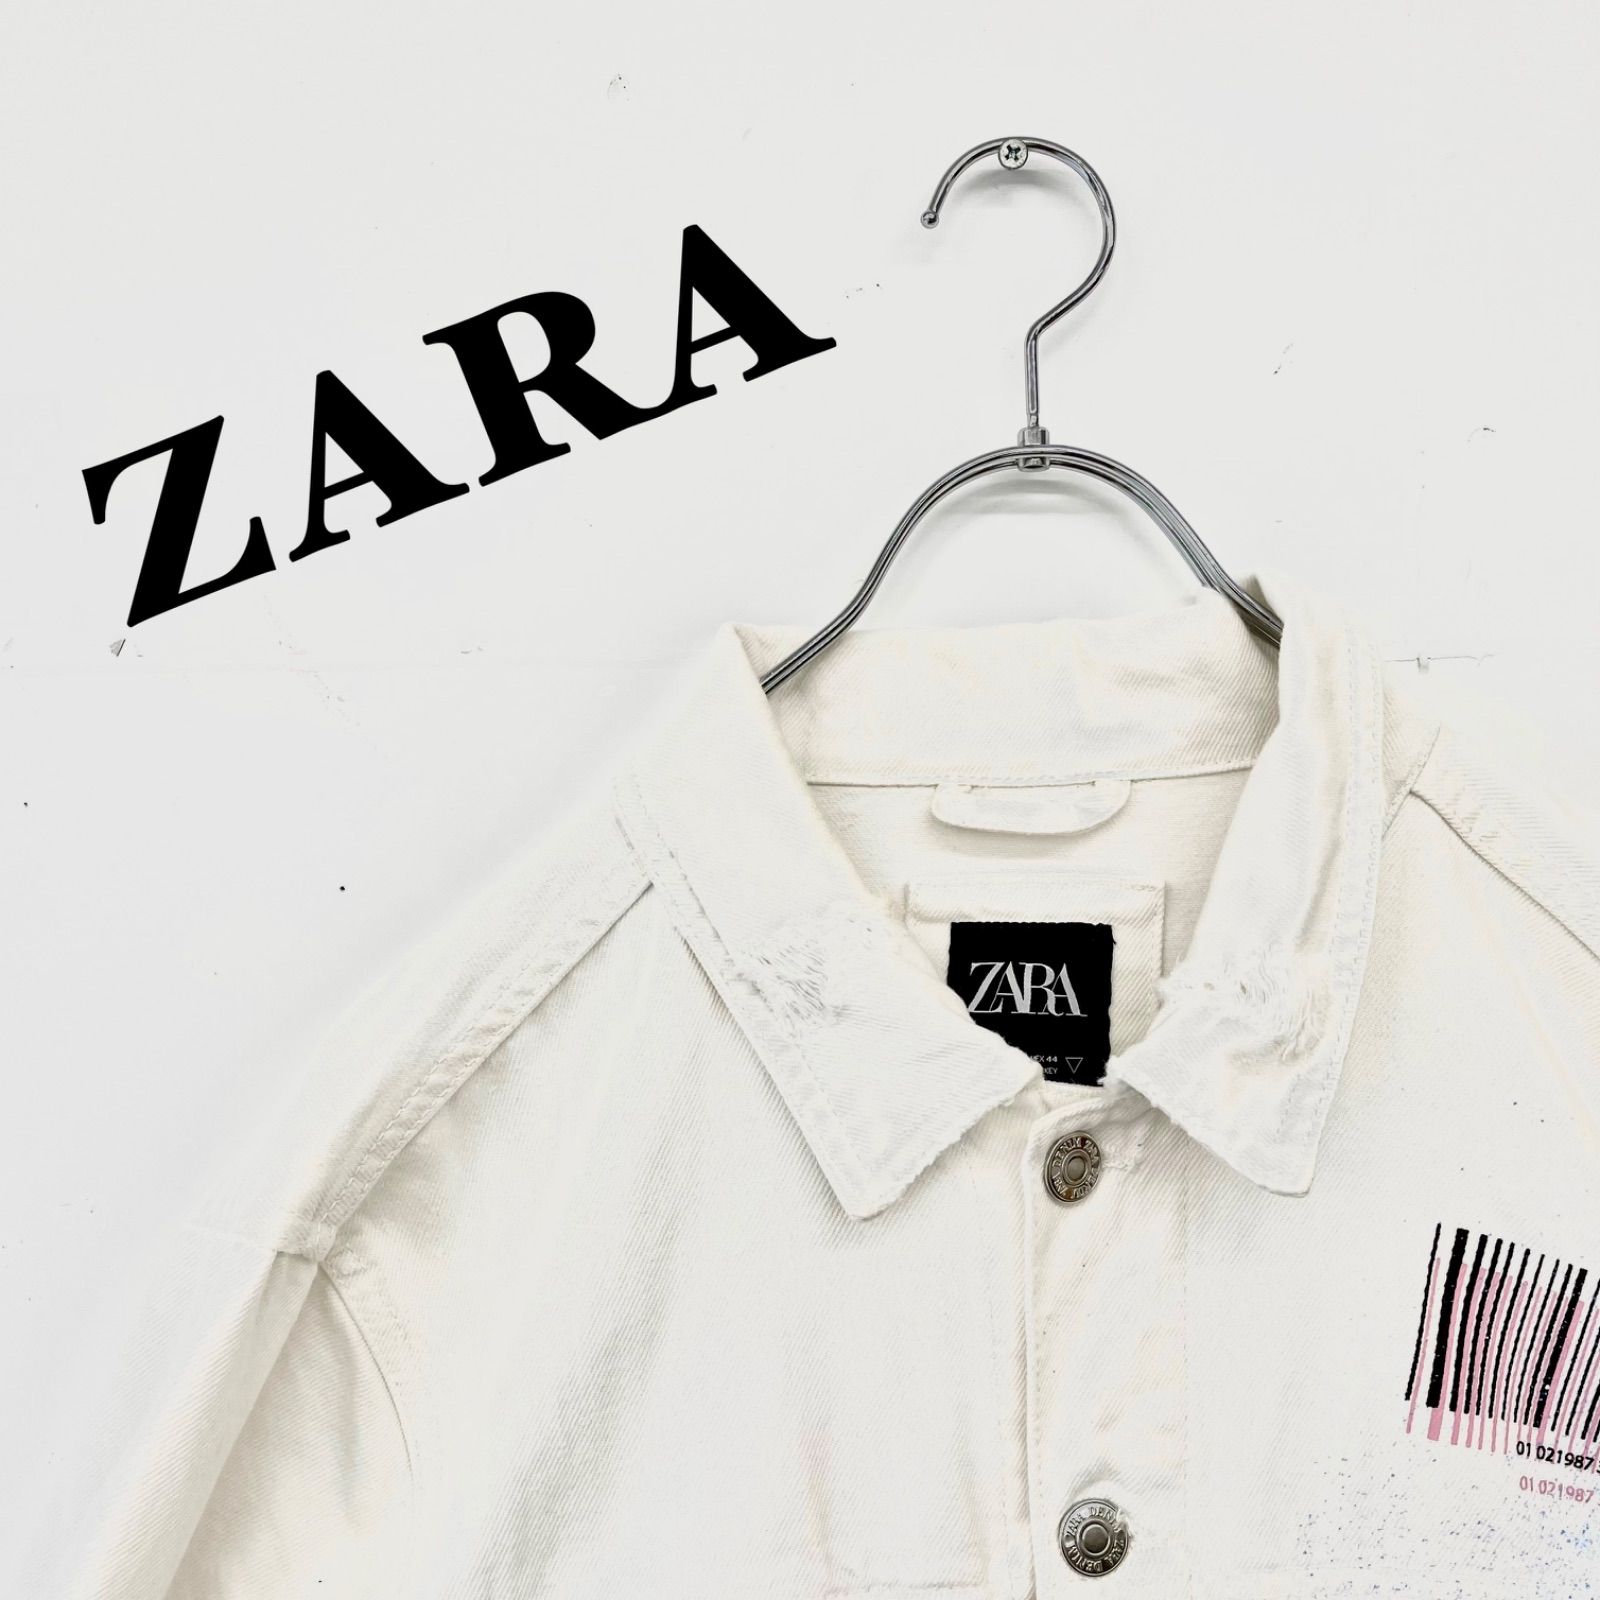 ZARA ザラ ジャケット アウター ダメージ加工 ペンキ加工 メンズ XL 白